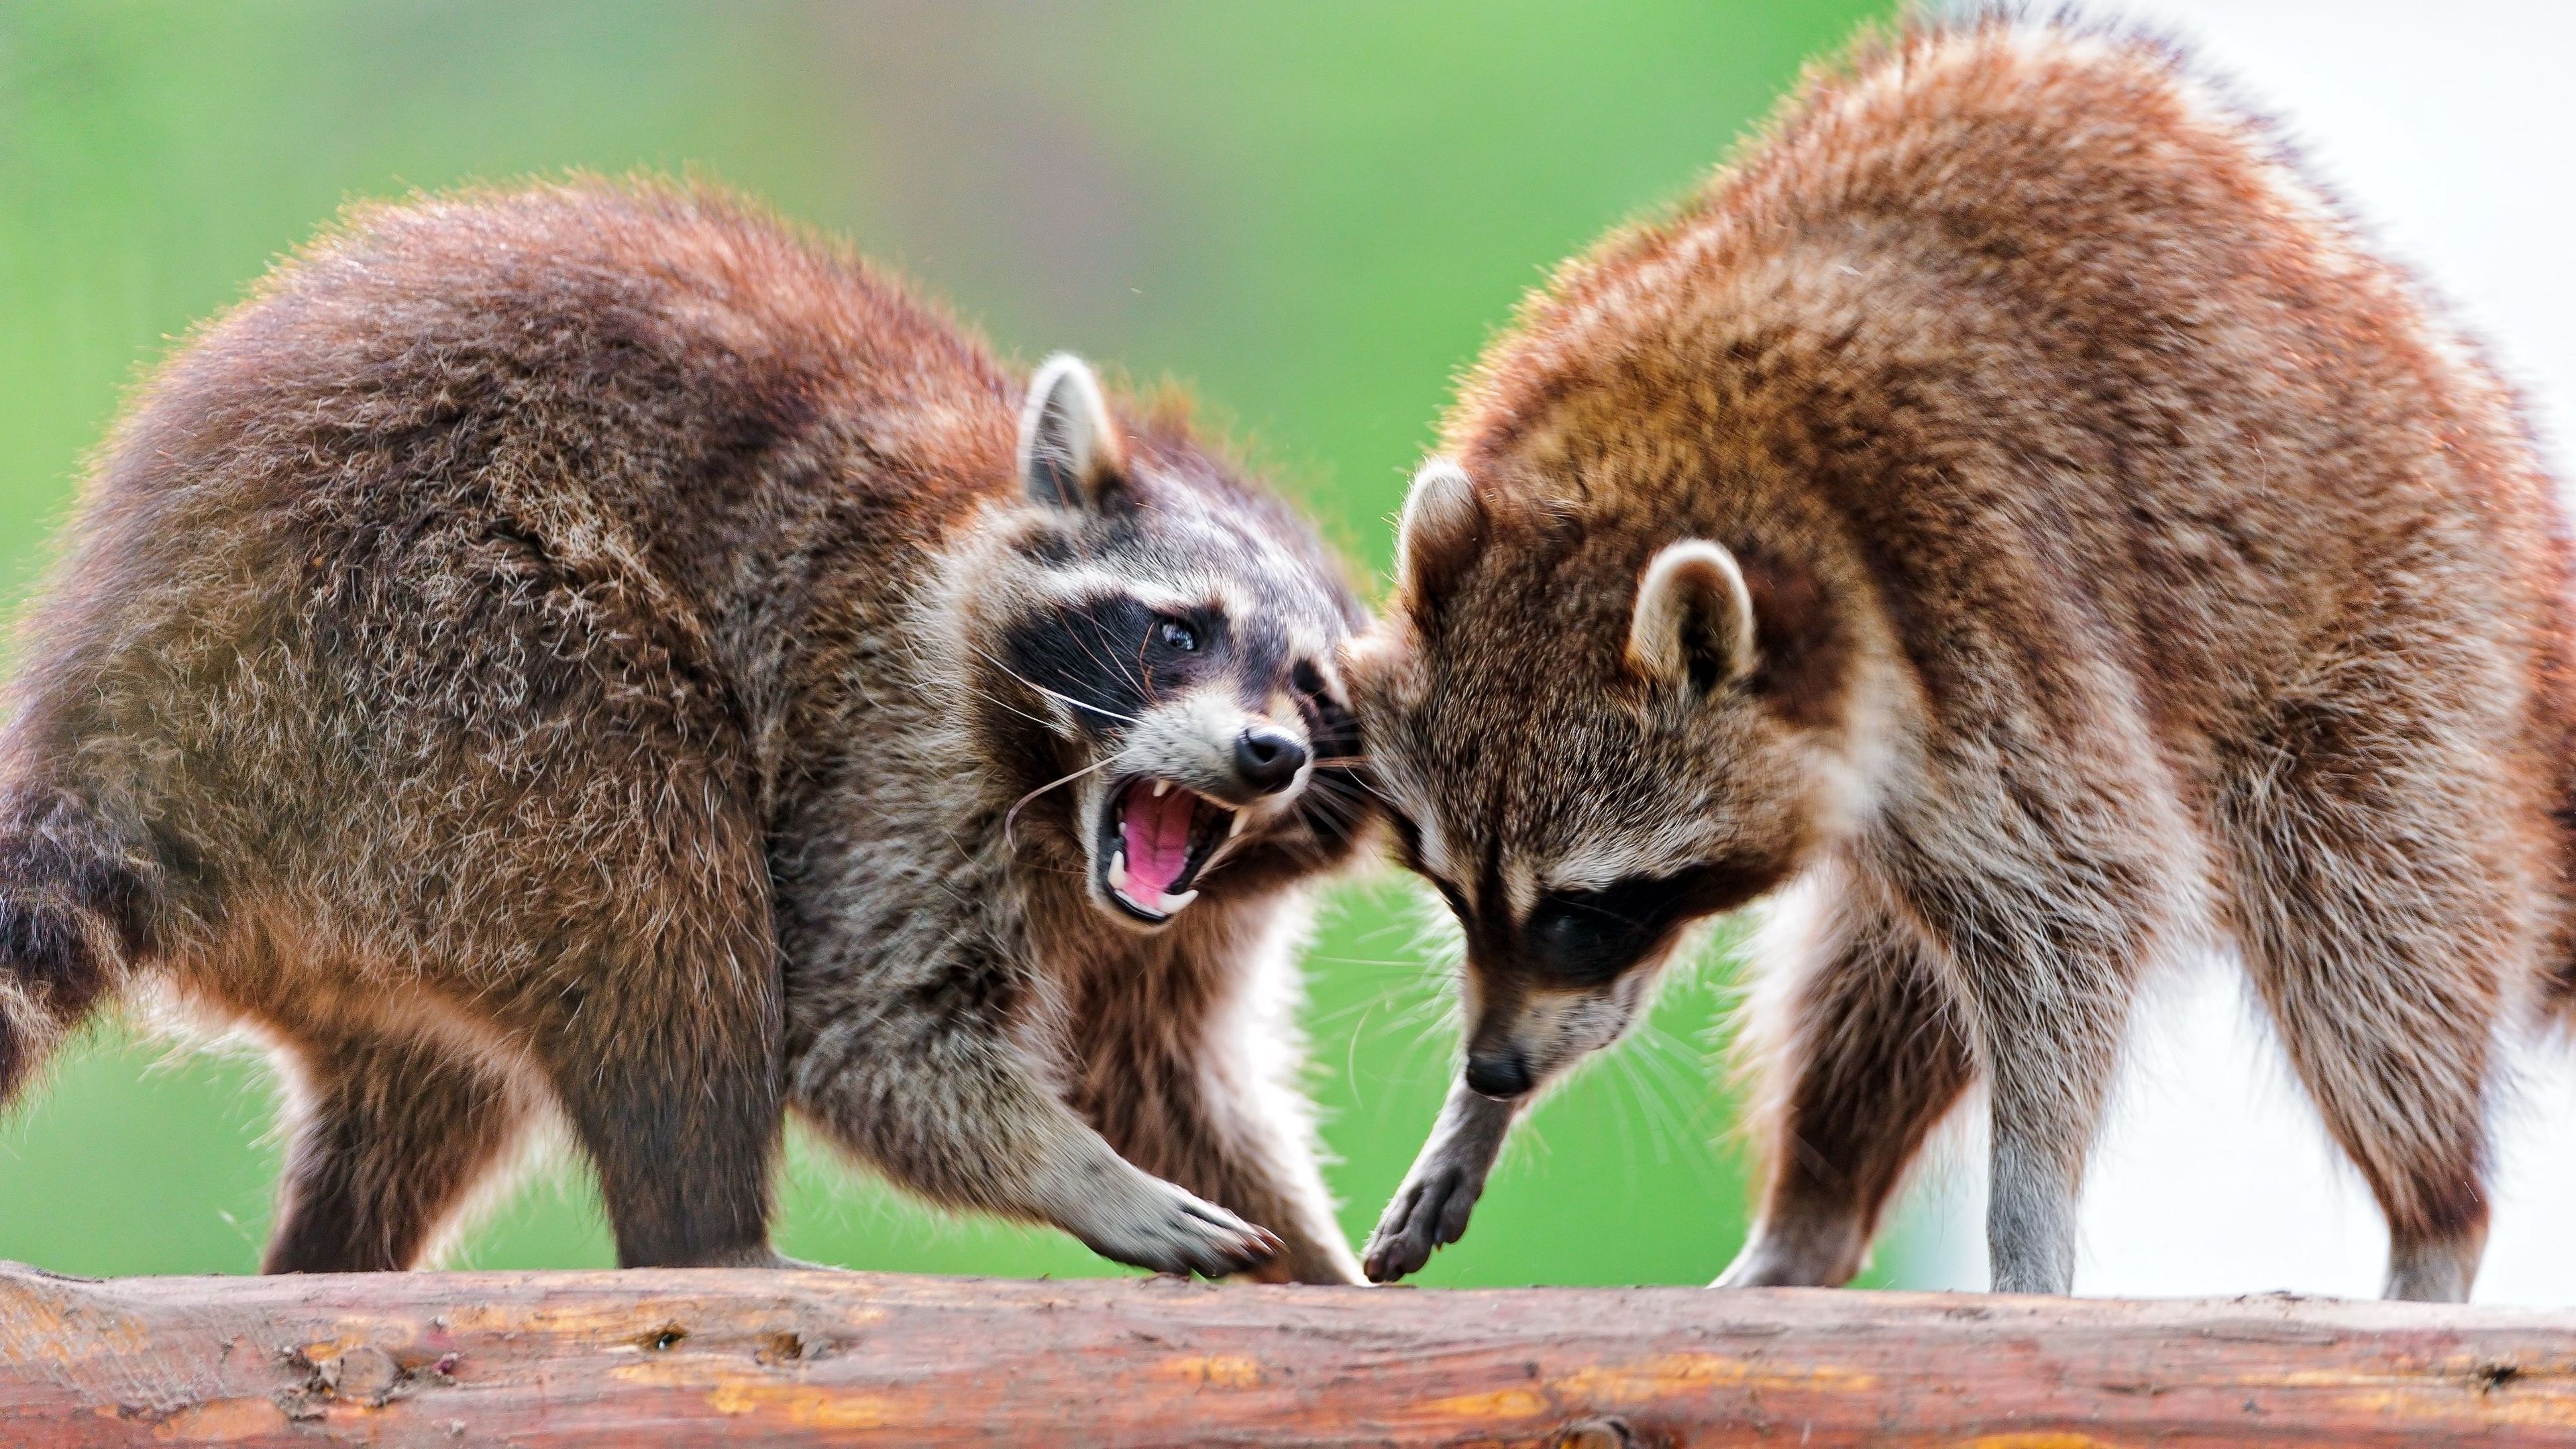 Download wallpaper 3840x2160 raccoons, raccoon, couple, fight 4k uhd 16:9 HD background